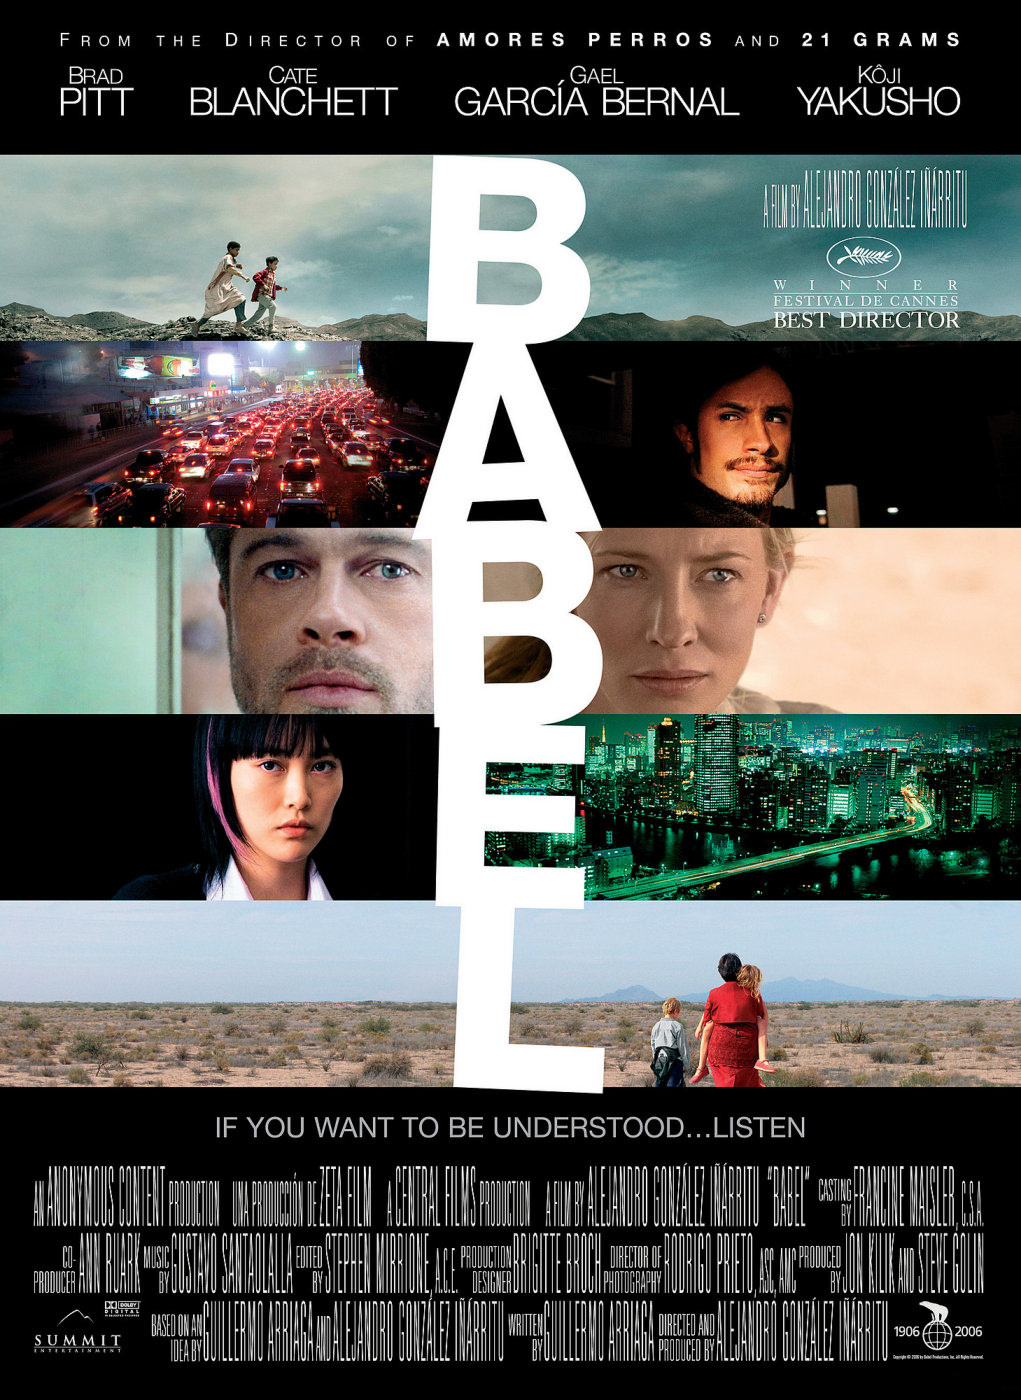 Babel-Posters_003.jpg